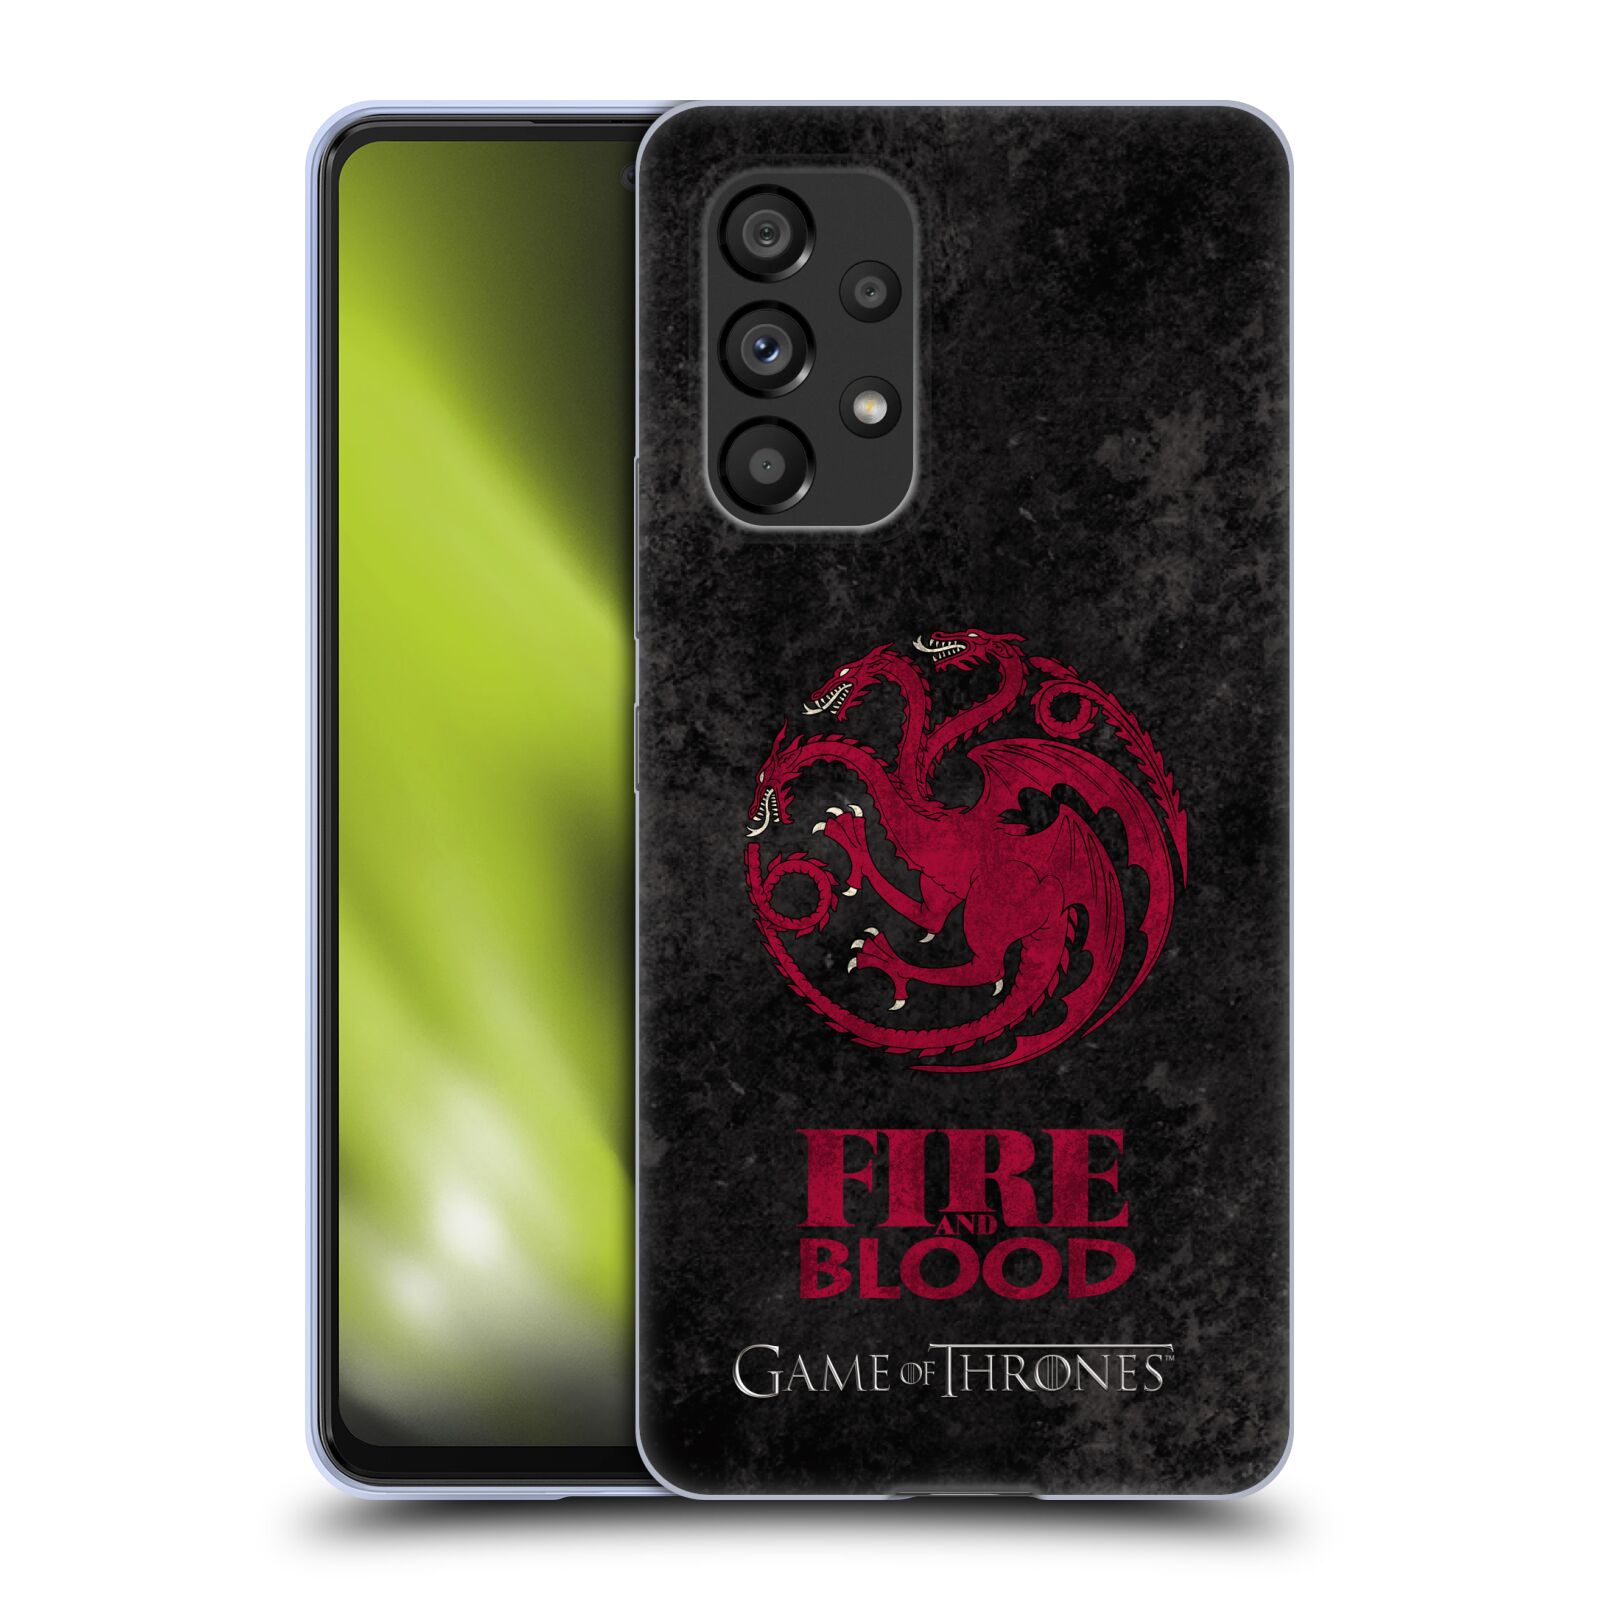 Silikonové pouzdro na mobil Samsung Galaxy A53 5G - Head Case - Hra o trůny - Sigils Targaryen - Fire and Blood (Silikonový kryt, obal, pouzdro na mobilní telefon Samsung Galaxy A53 5G s motivem Hra o trůny - Sigils Targaryen - Fire and Blood)